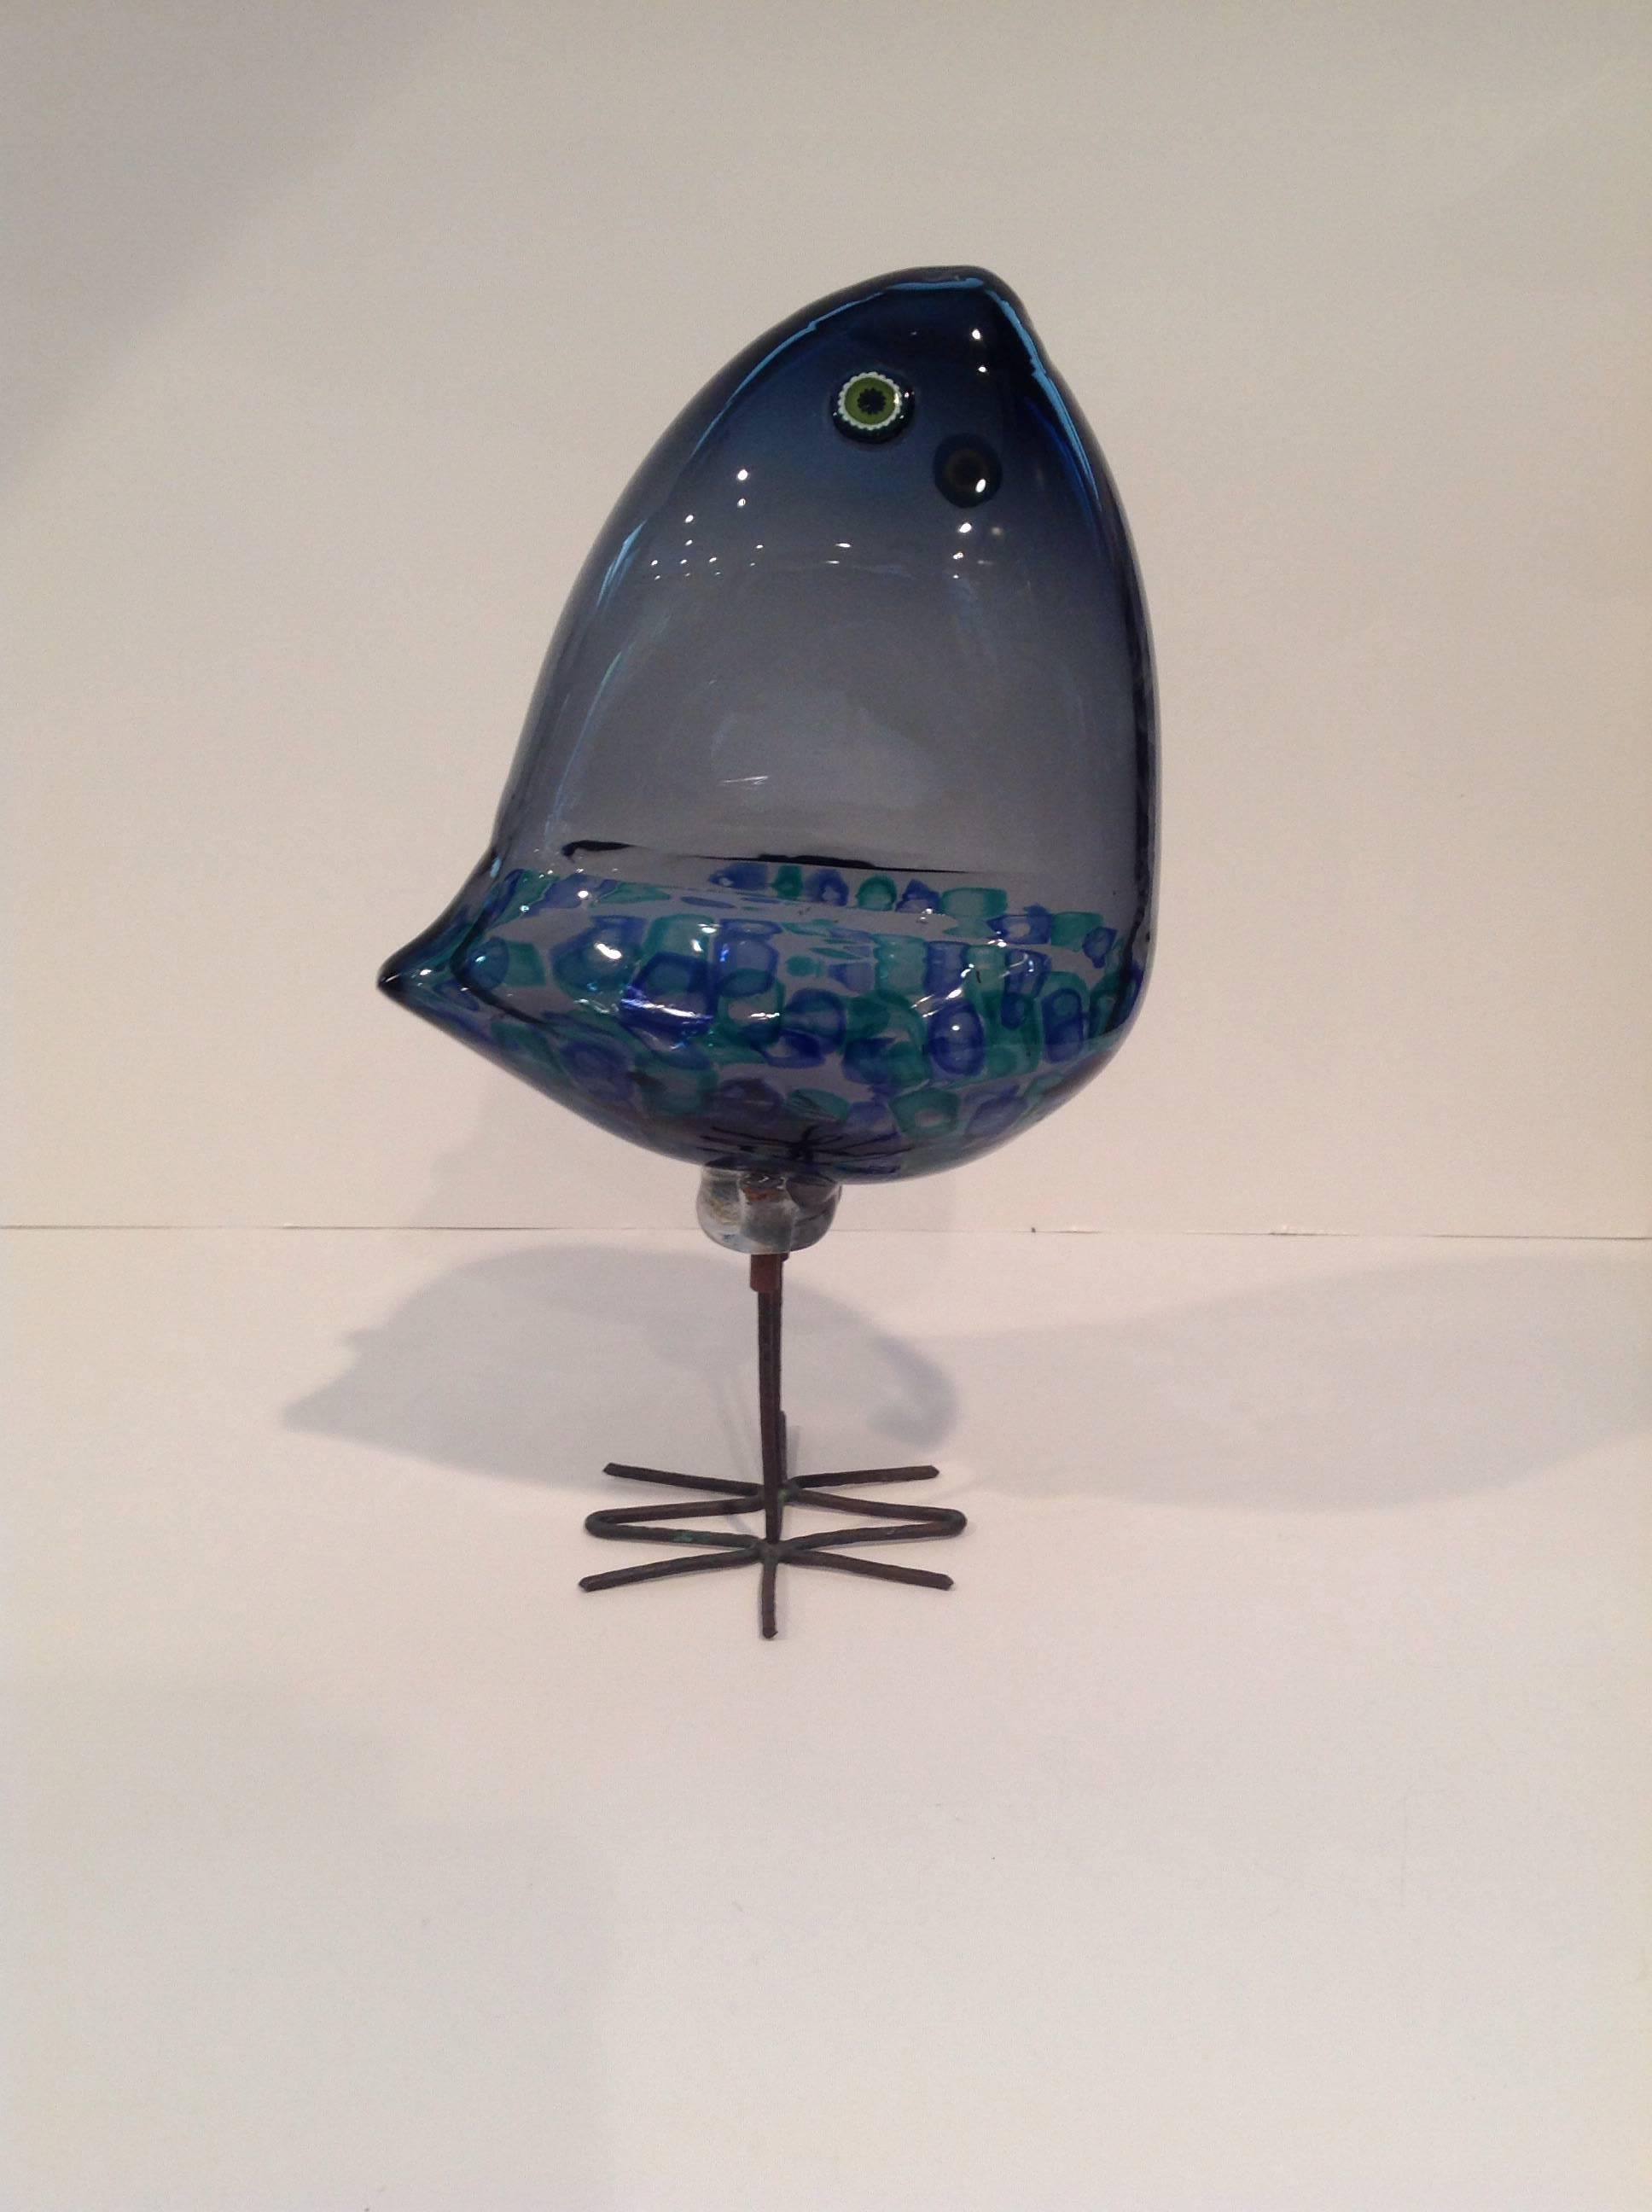 Wonderful Pulcino bird designed by Alessandro Pianon for Vistosi. Murrine glass and murrine eyes on copper legs.